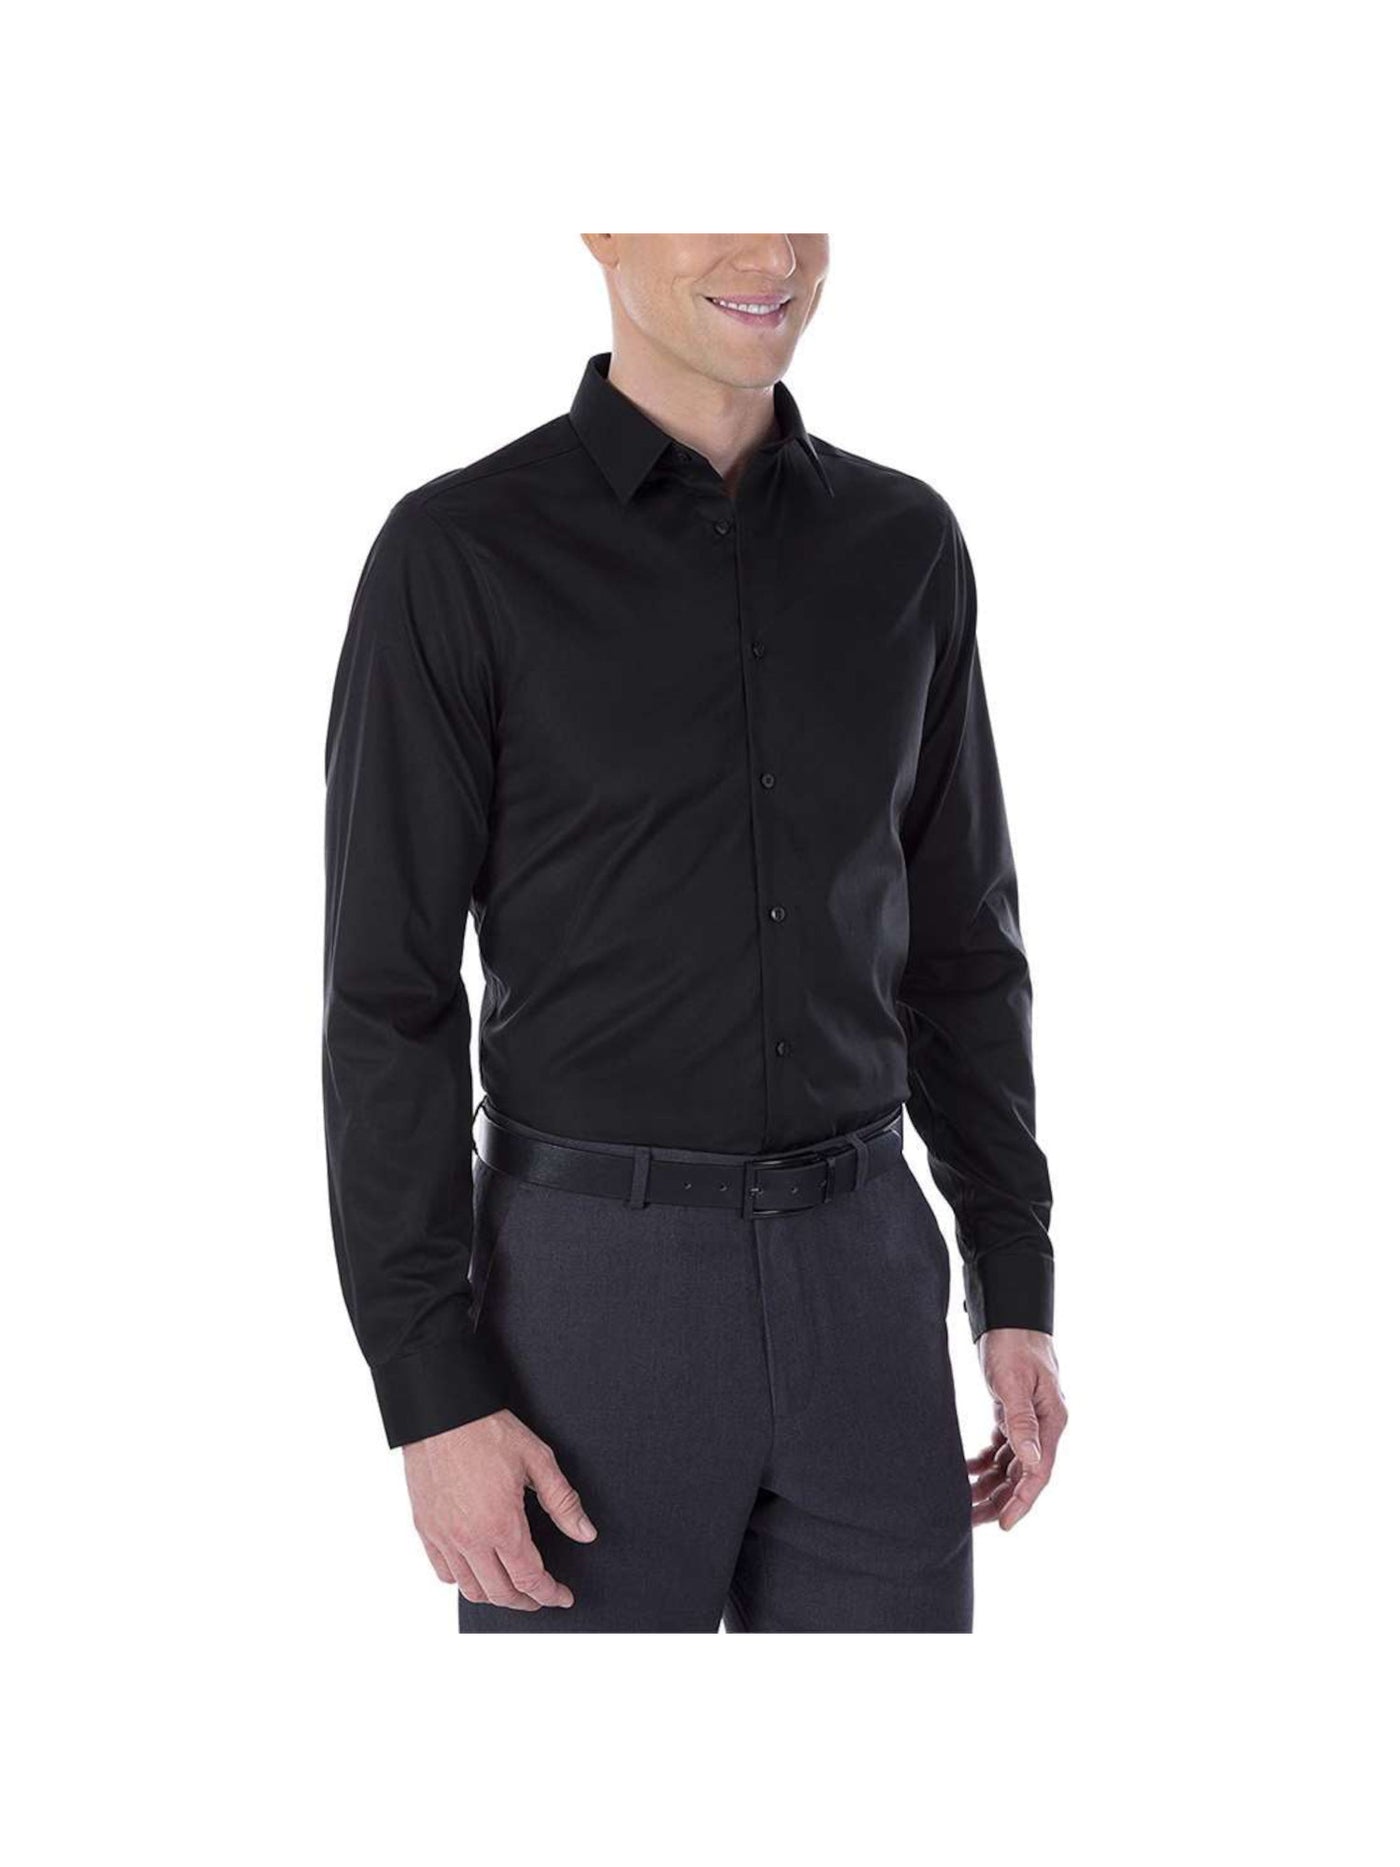 CALVIN KLEIN Mens Black Spread Collar Slim Fit Button Down Shirt 16- 34/35